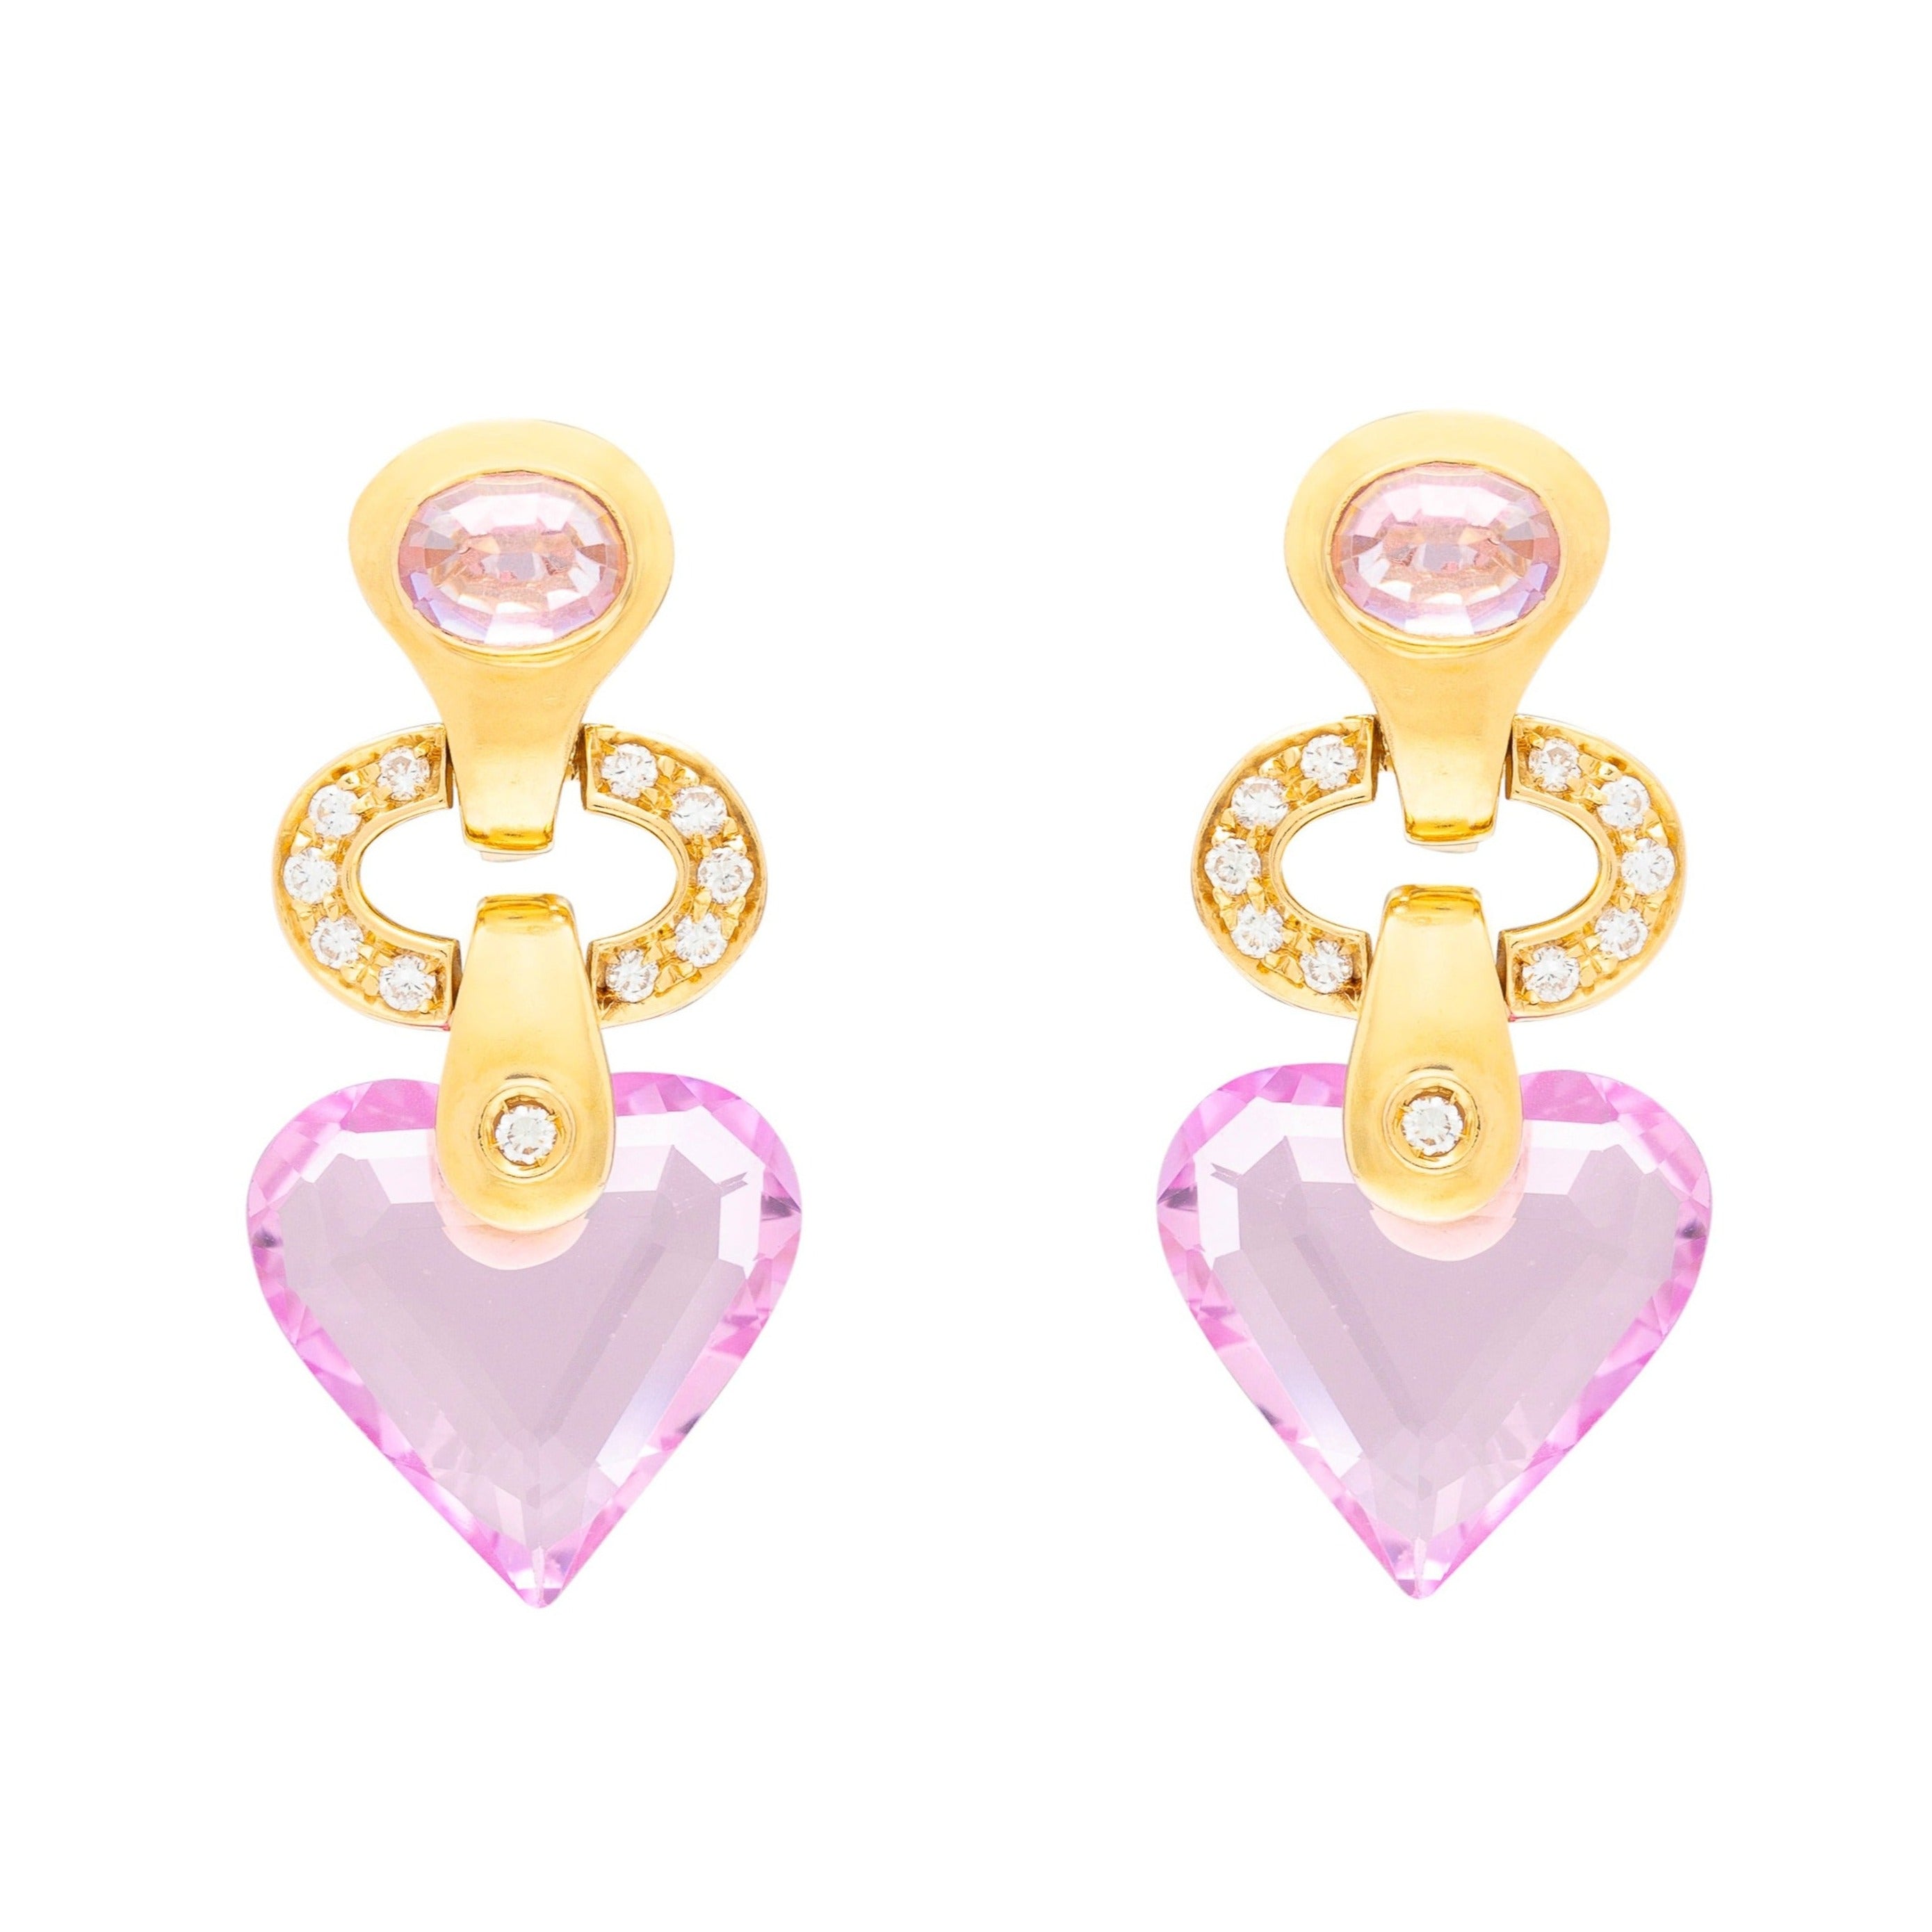 Diamond, Kunzite, and 18k Gold Heart Earrings